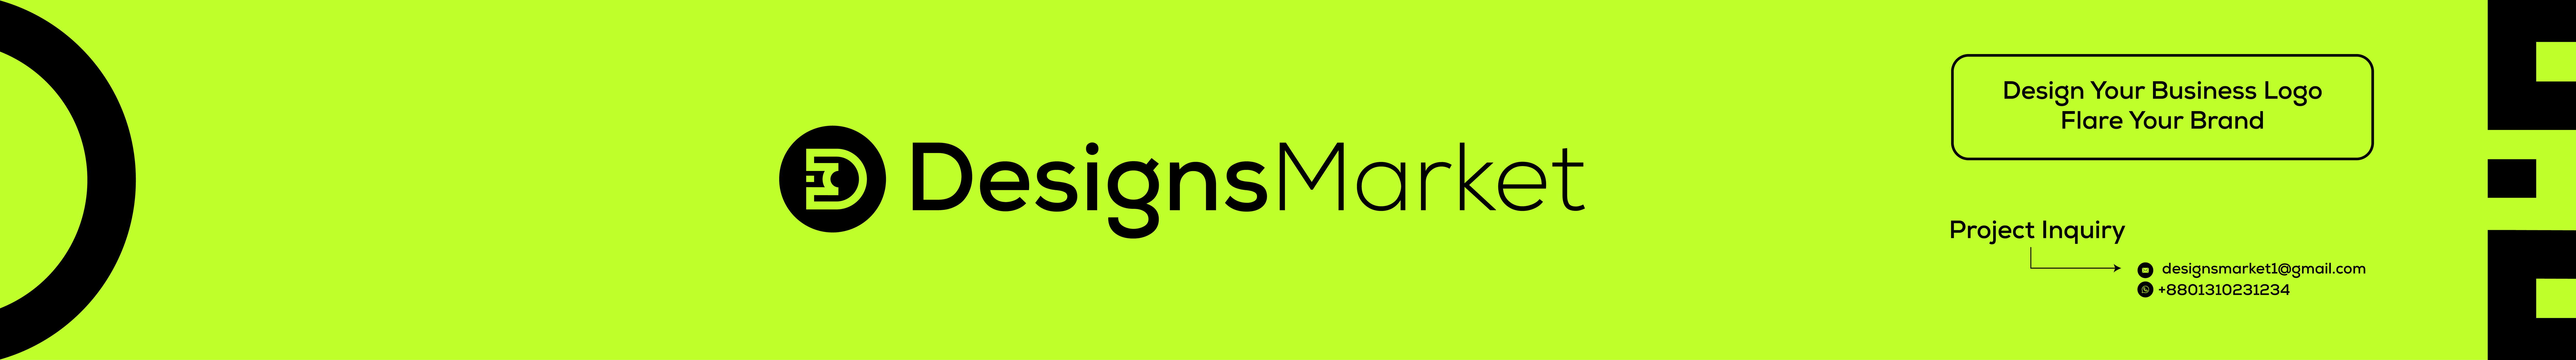 Designs Market's profile banner